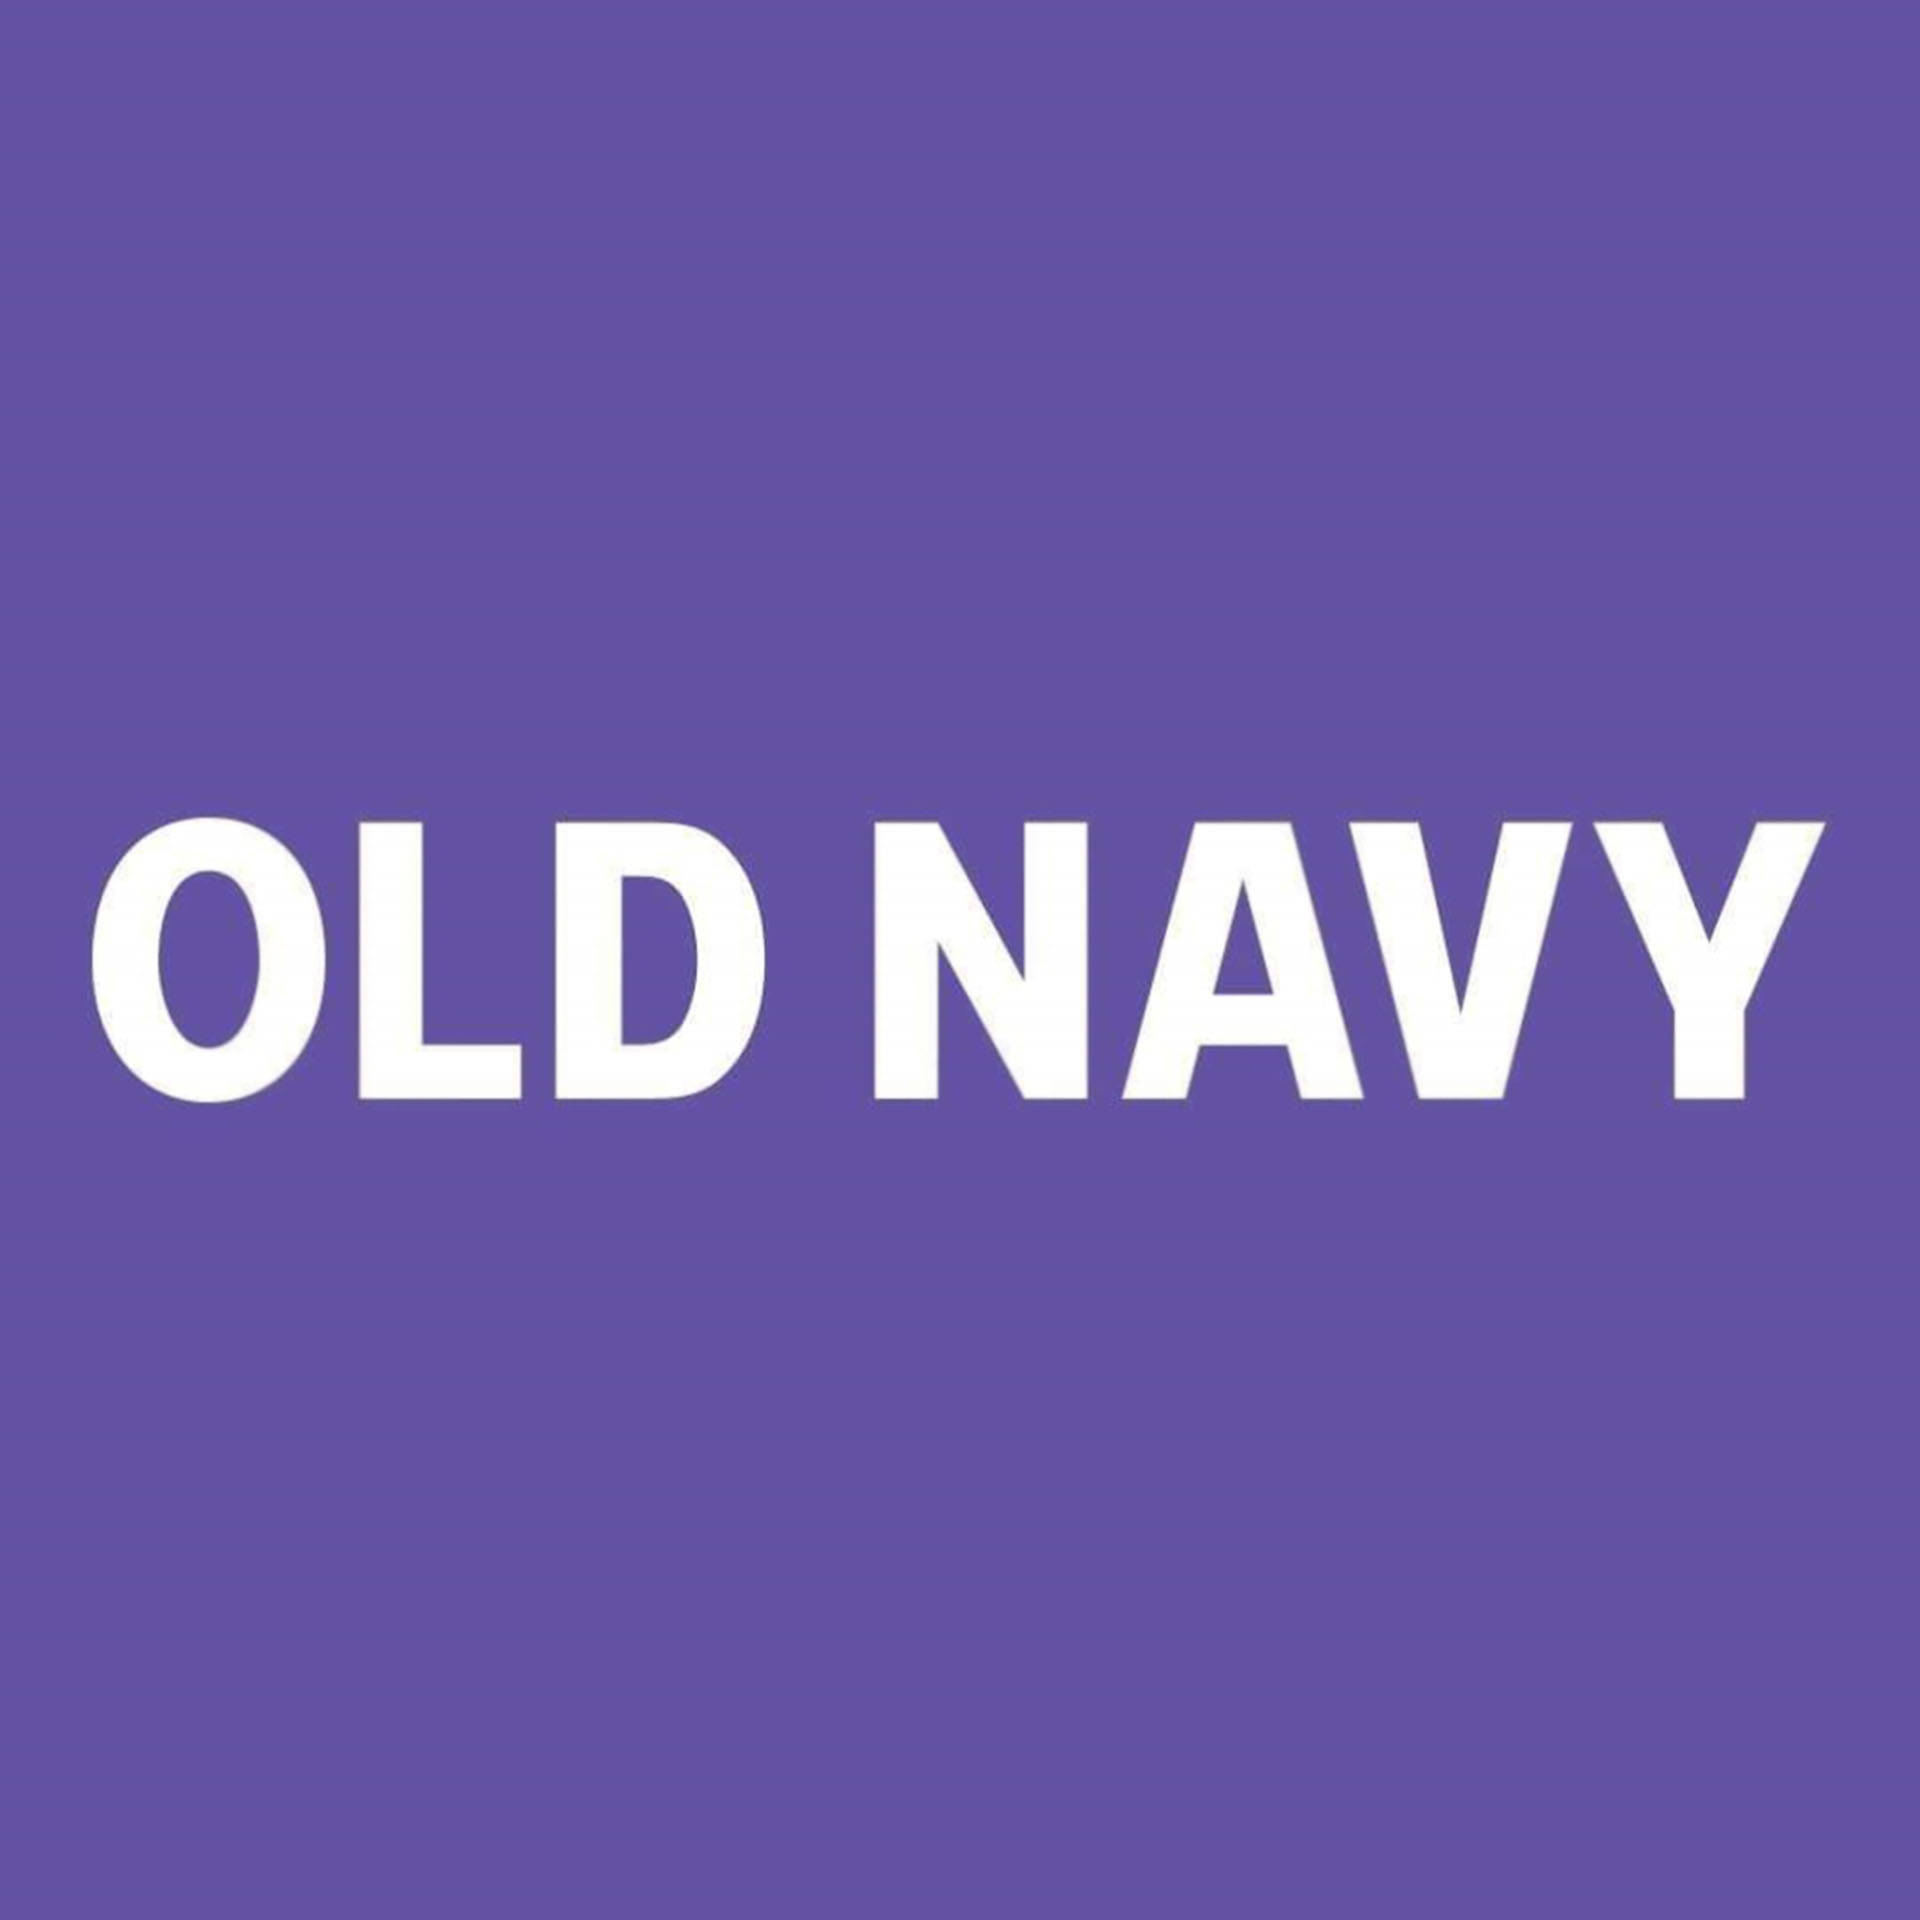 Vibrant Old Navy Logo On A Purple Background Background